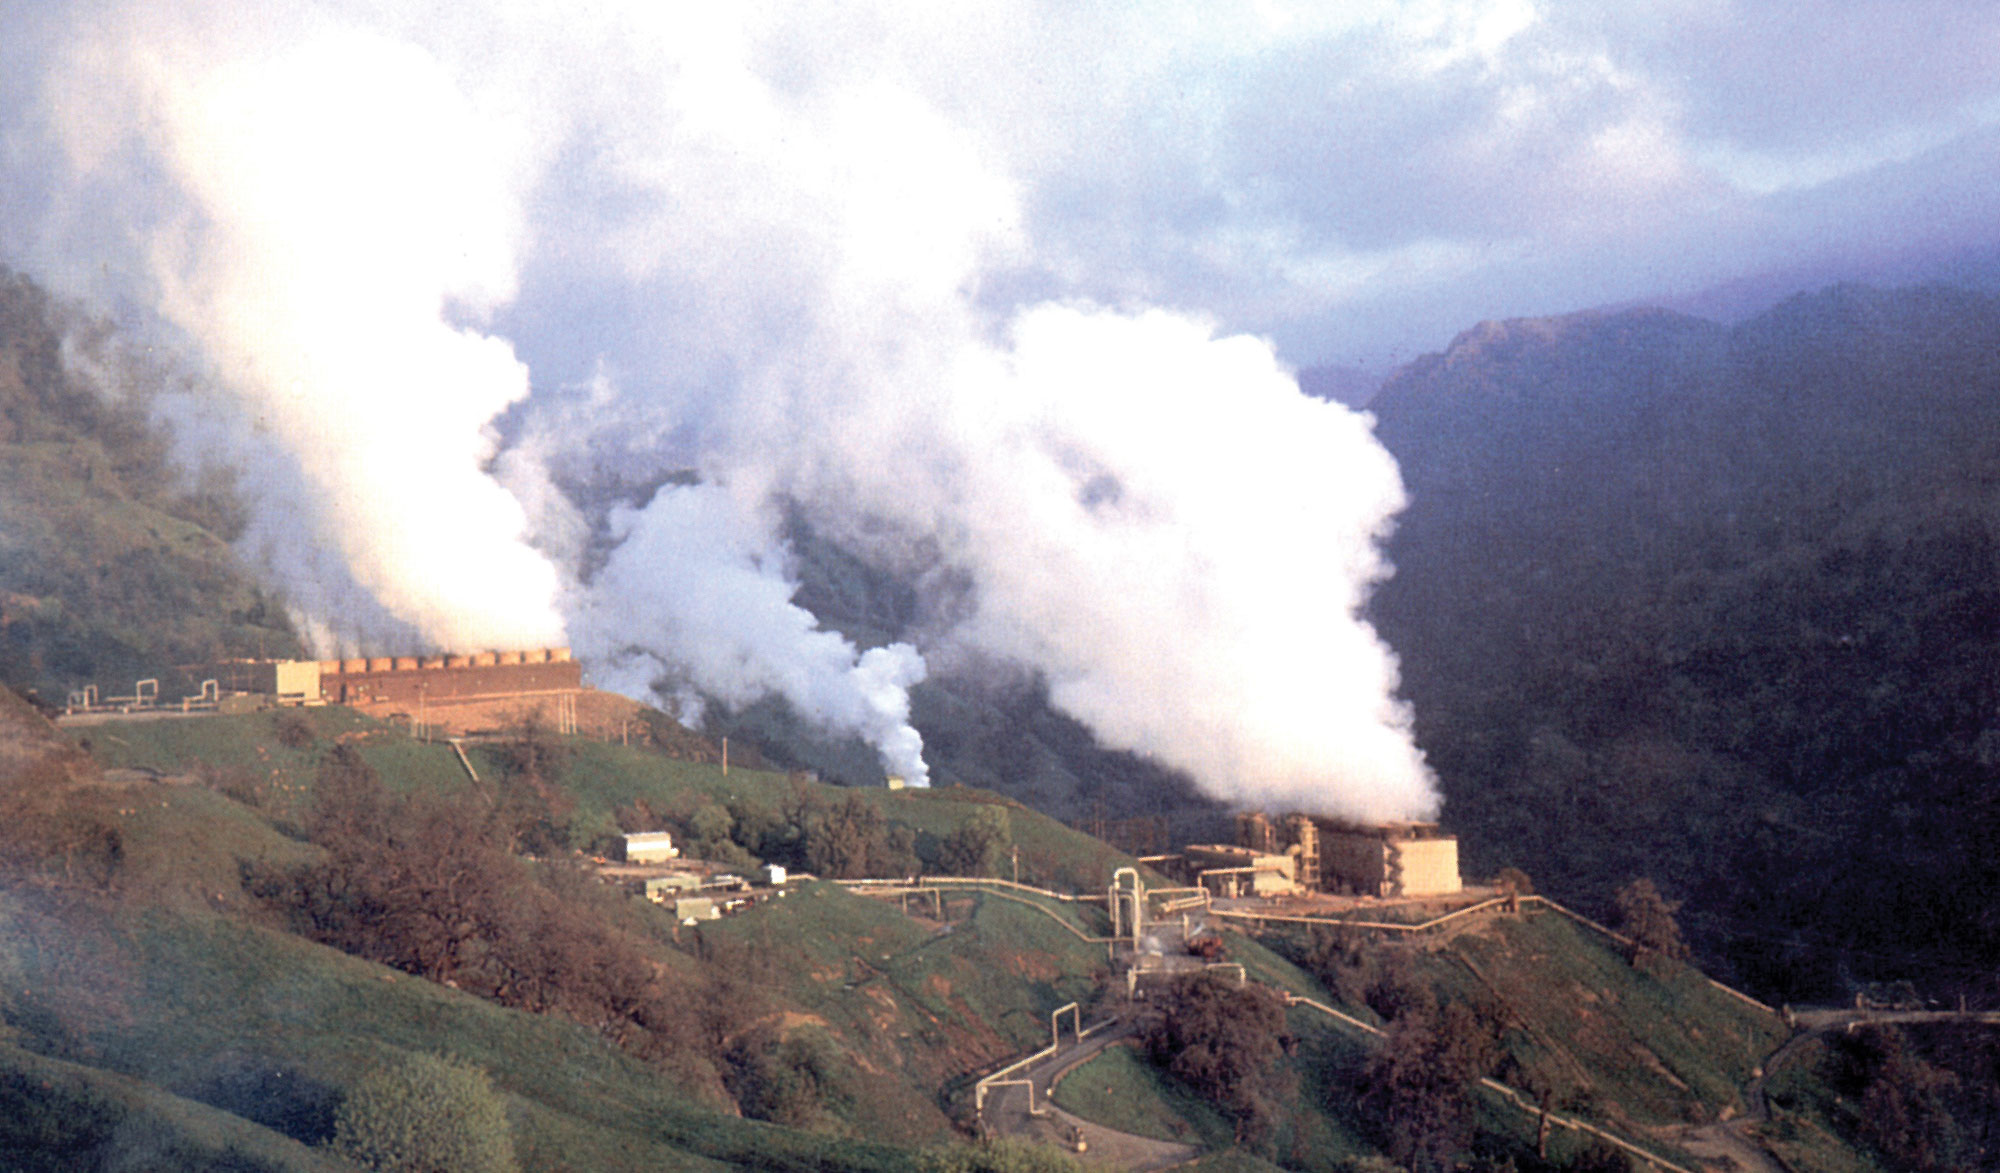 Photograph of a geothermal plant in Santa Rosa, California.